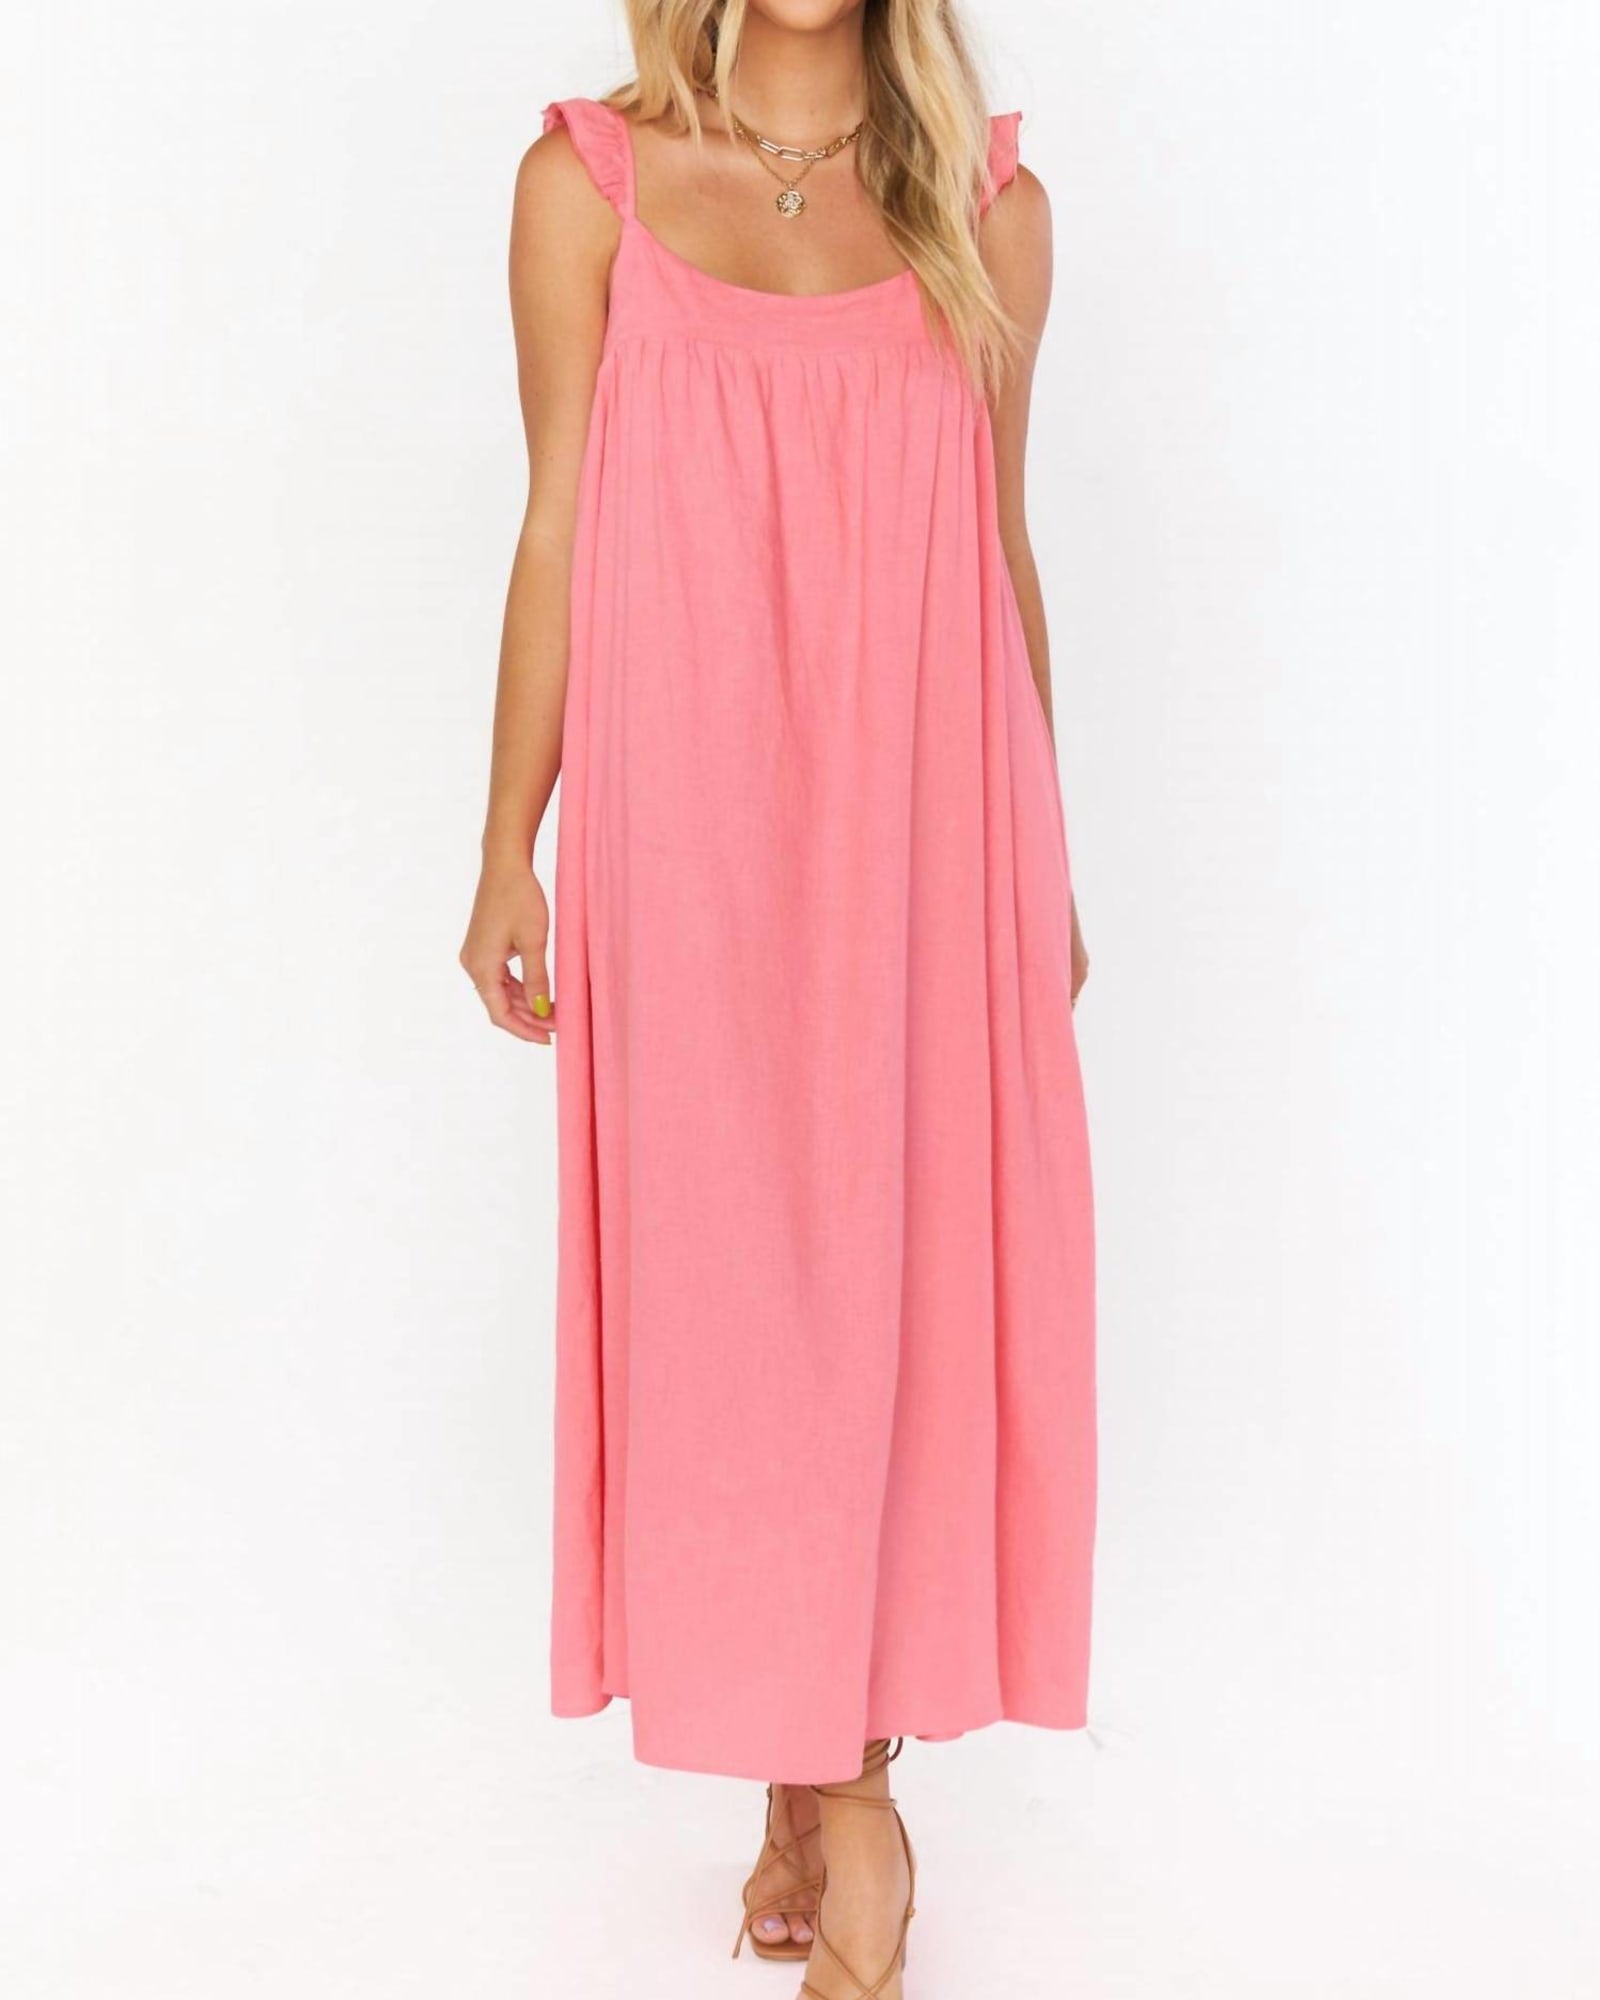 Oasis Ruffle Dress in Flamingo Pink Linen | Flamingo Pink Linen